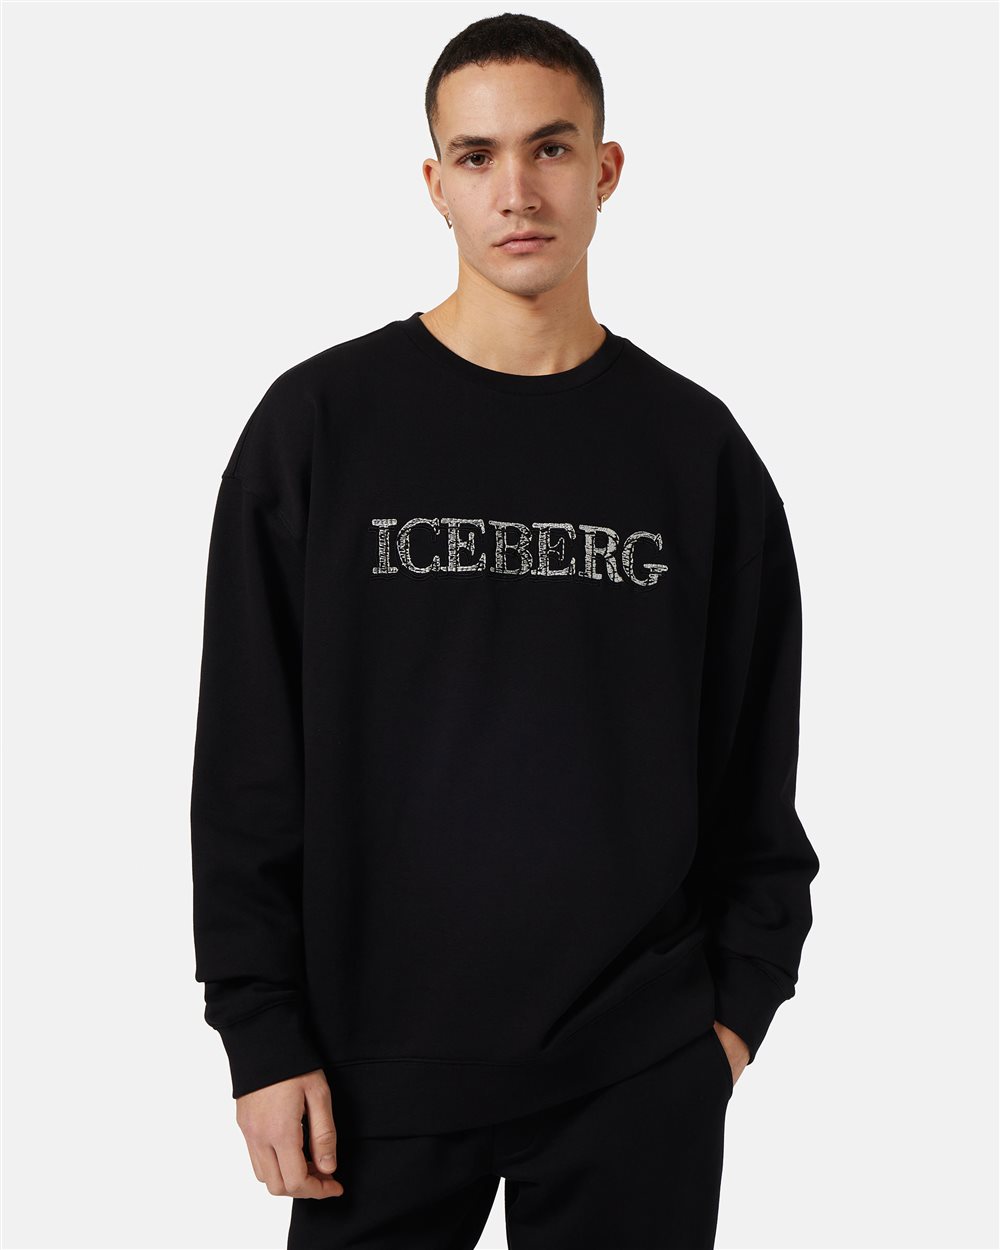 Sweatshirt with logo - Iceberg - Official Website